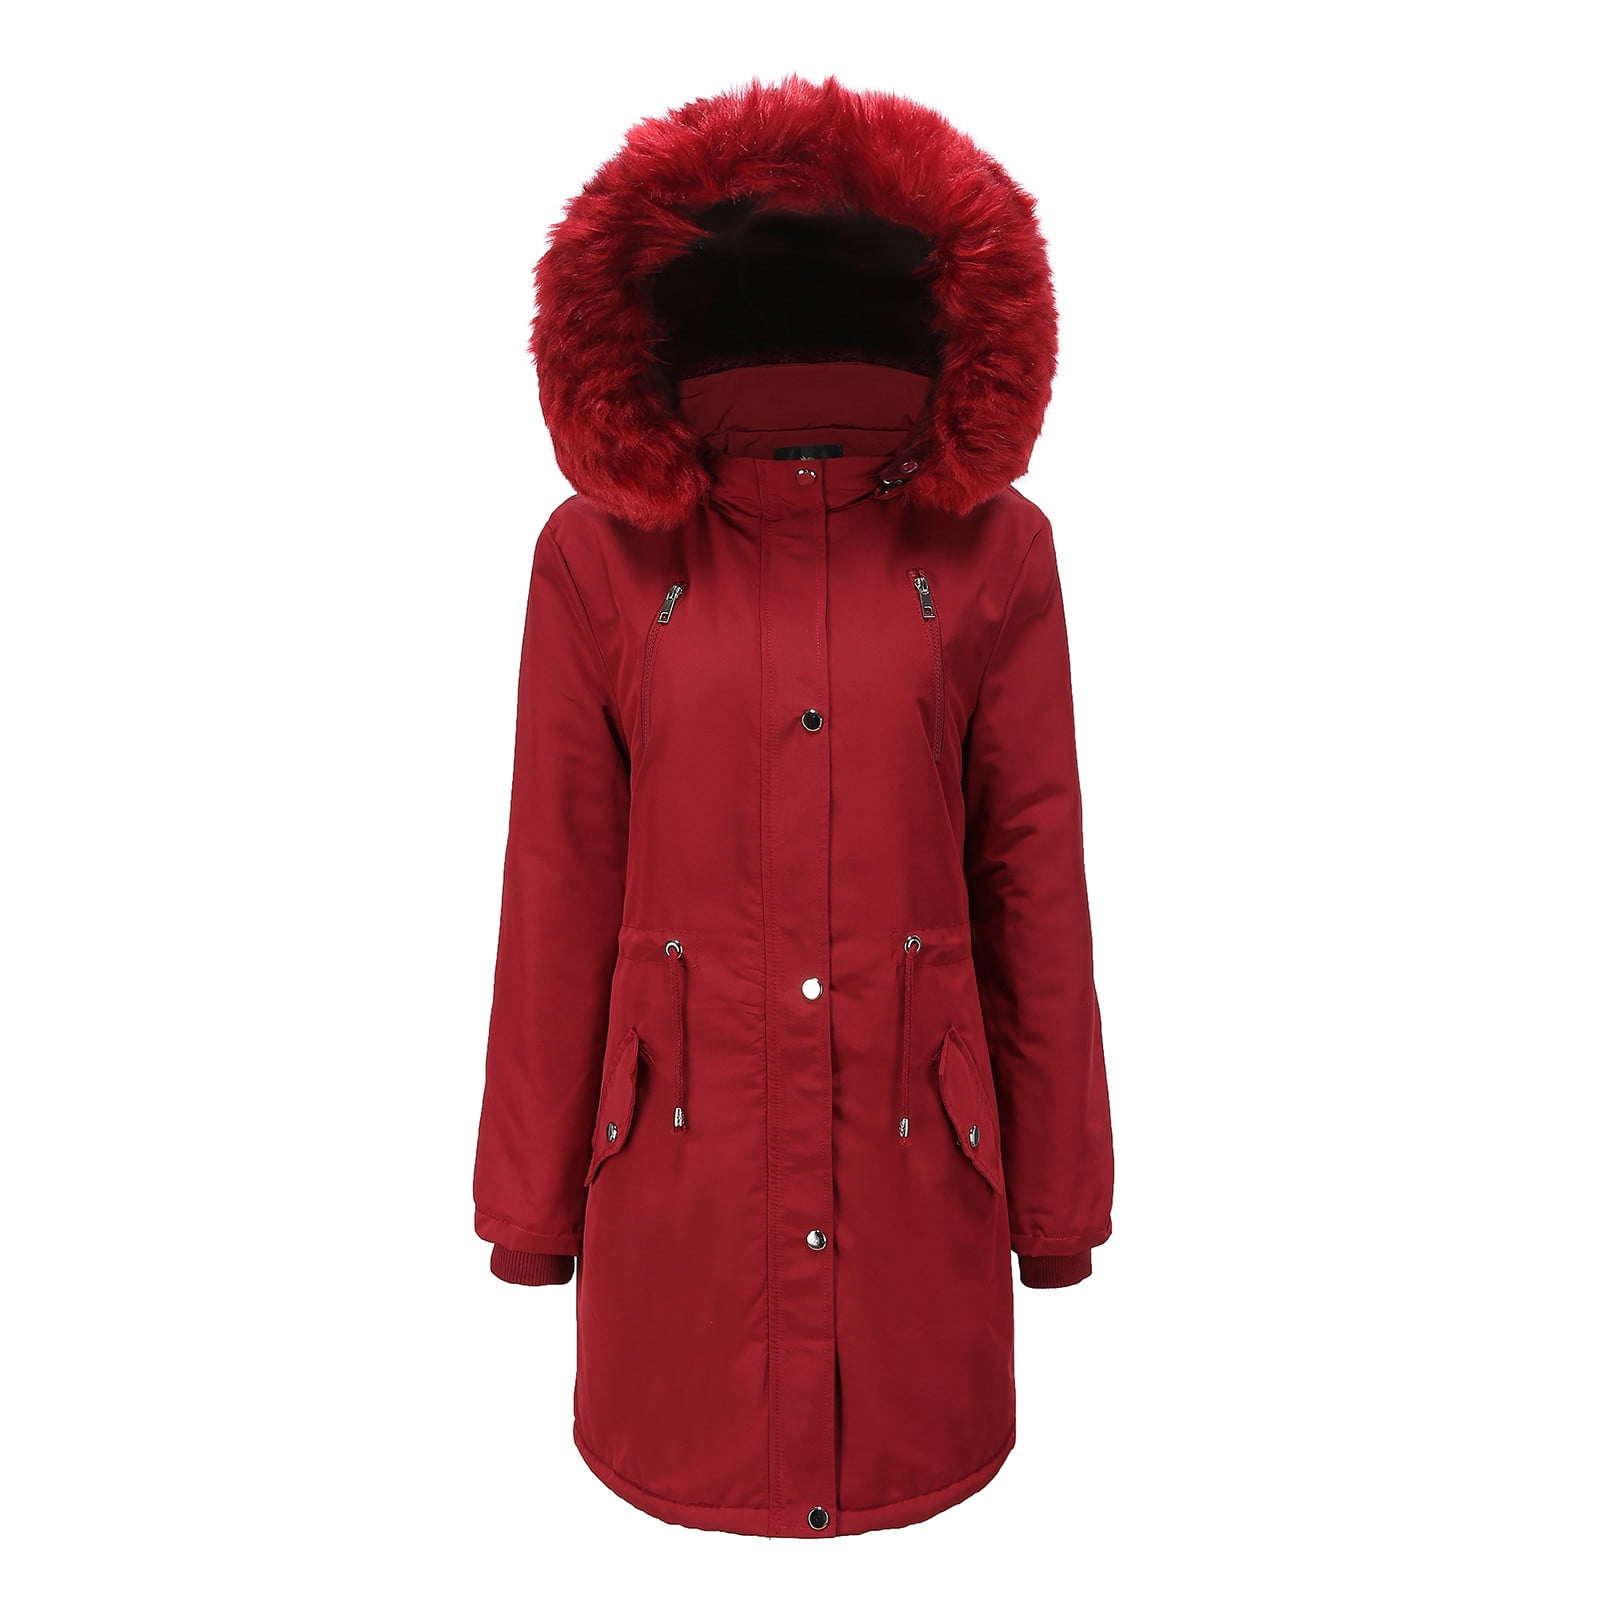 Clearance Women's Winter Zipper Coat Warm Puffer Thicken Hooded Fleece ...